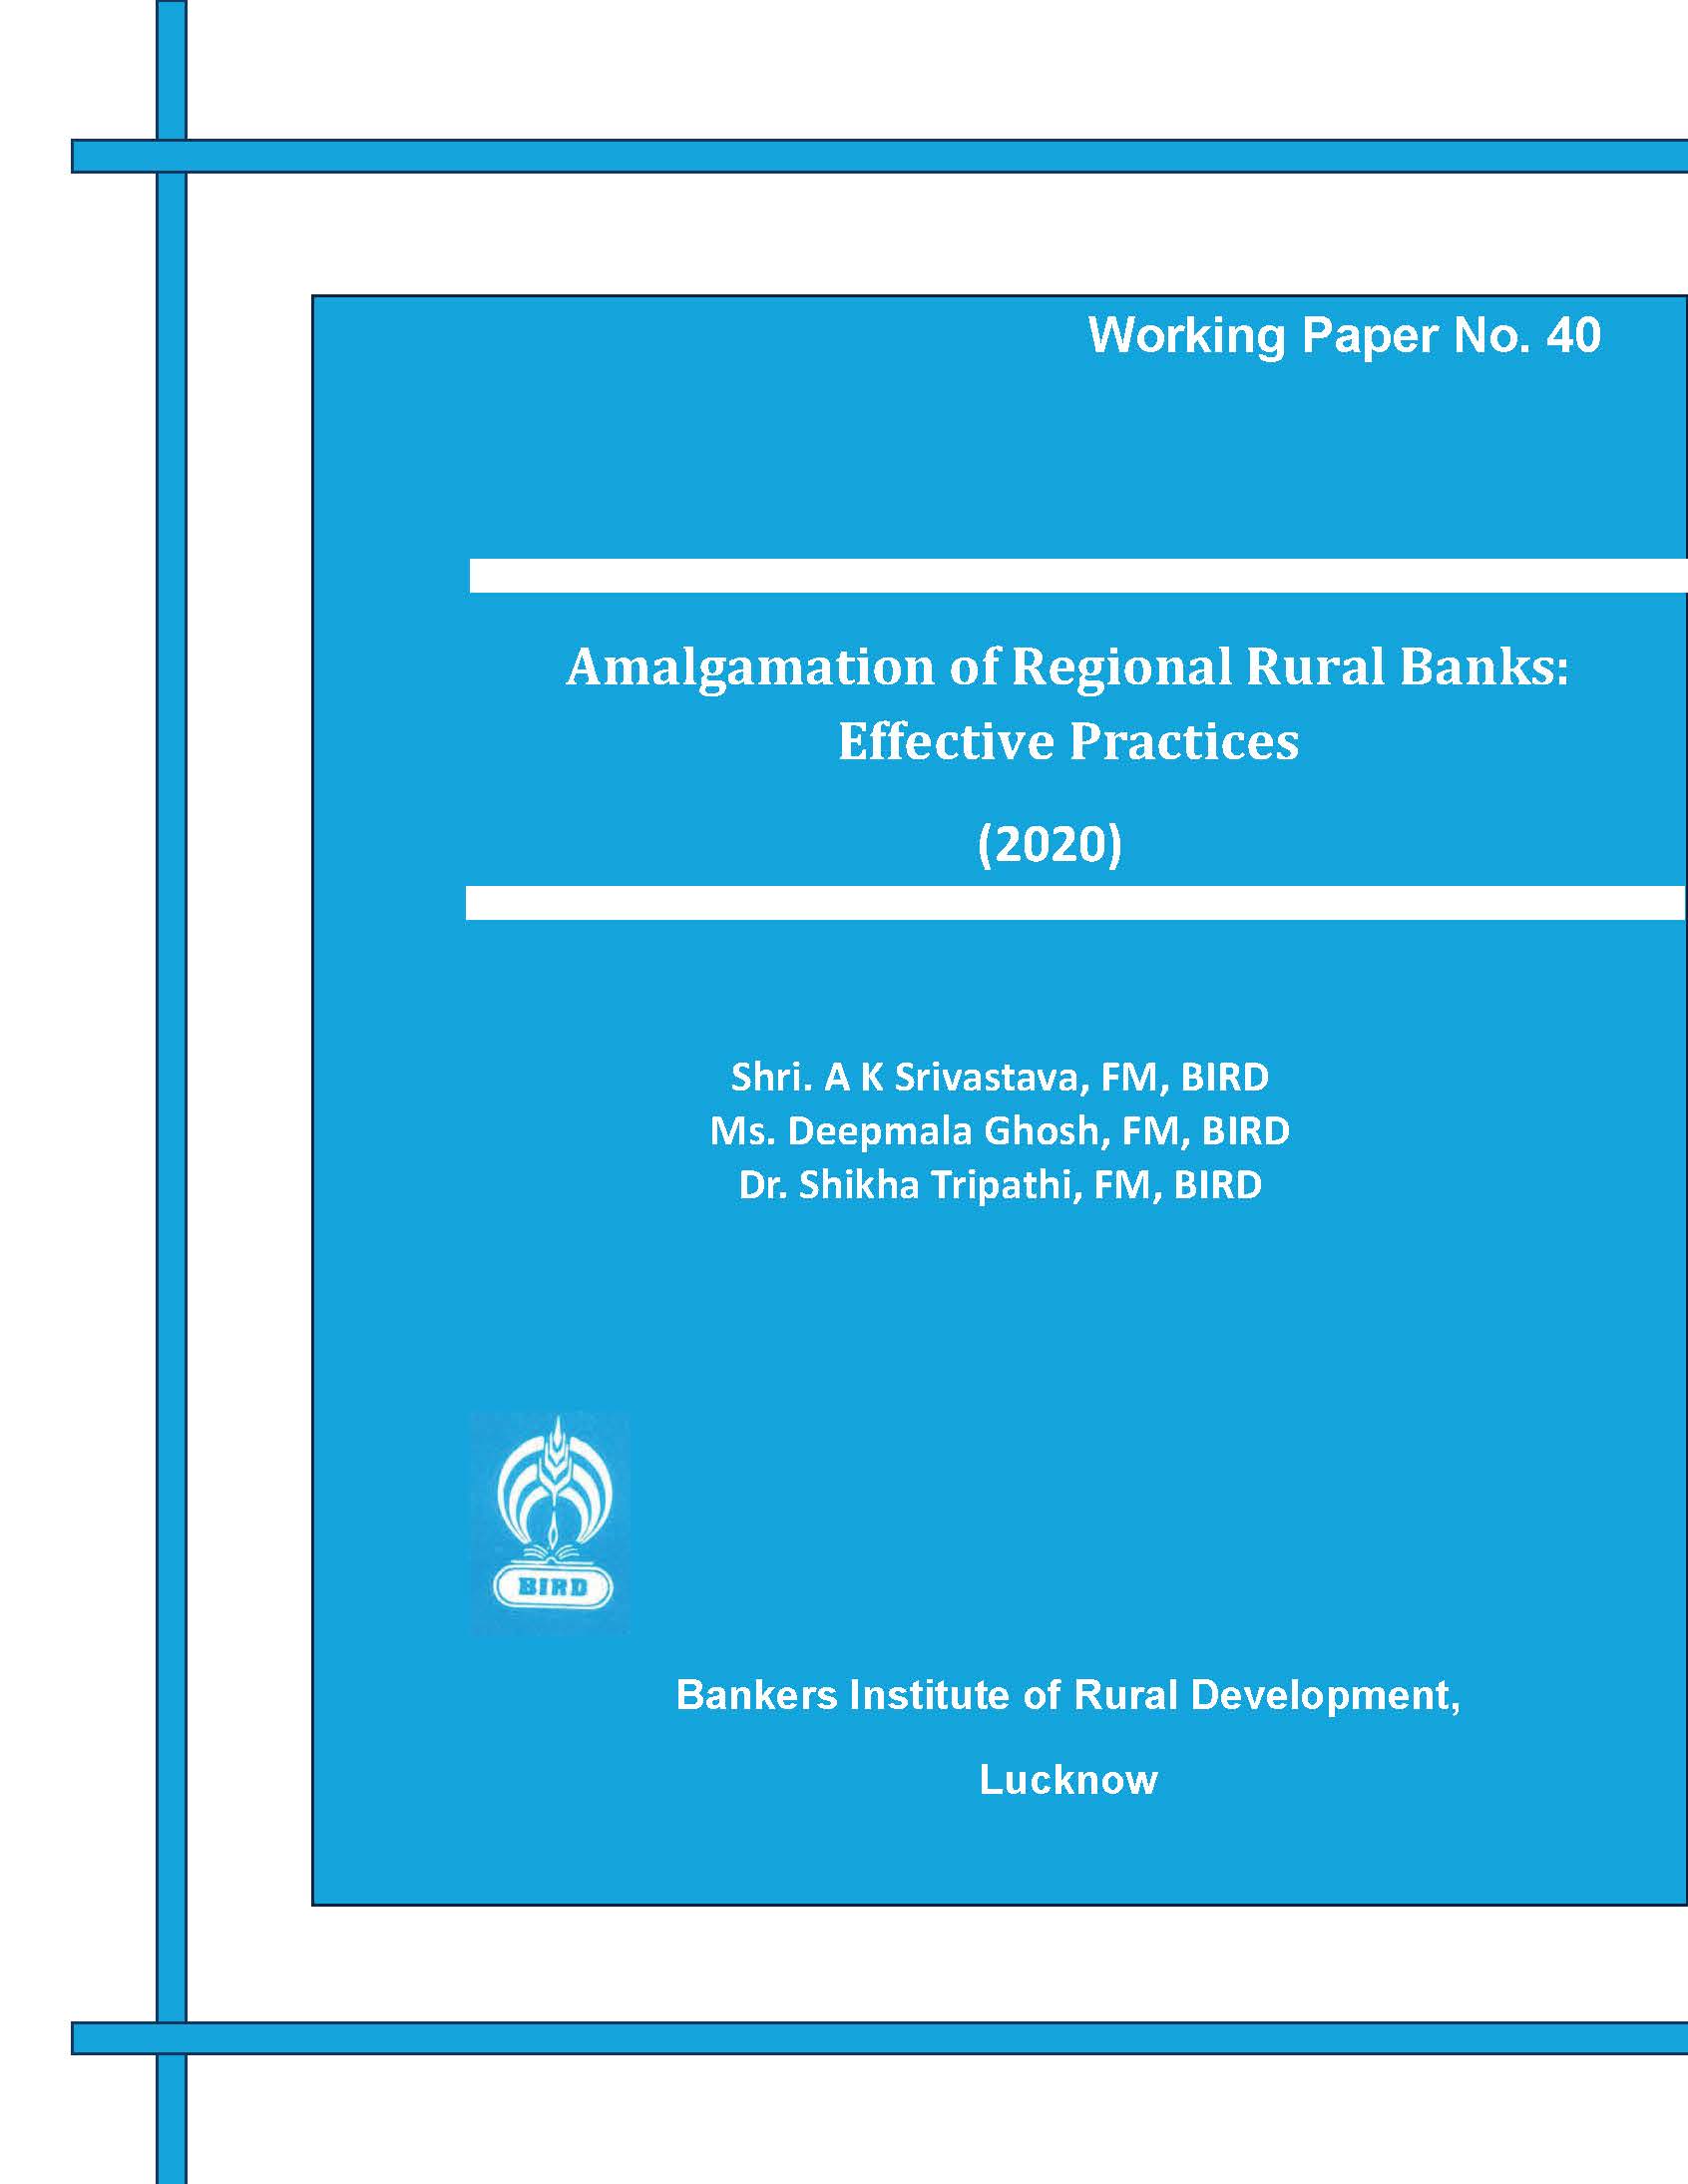 Amalgamation of Regional Rural Banks: Effective Practices